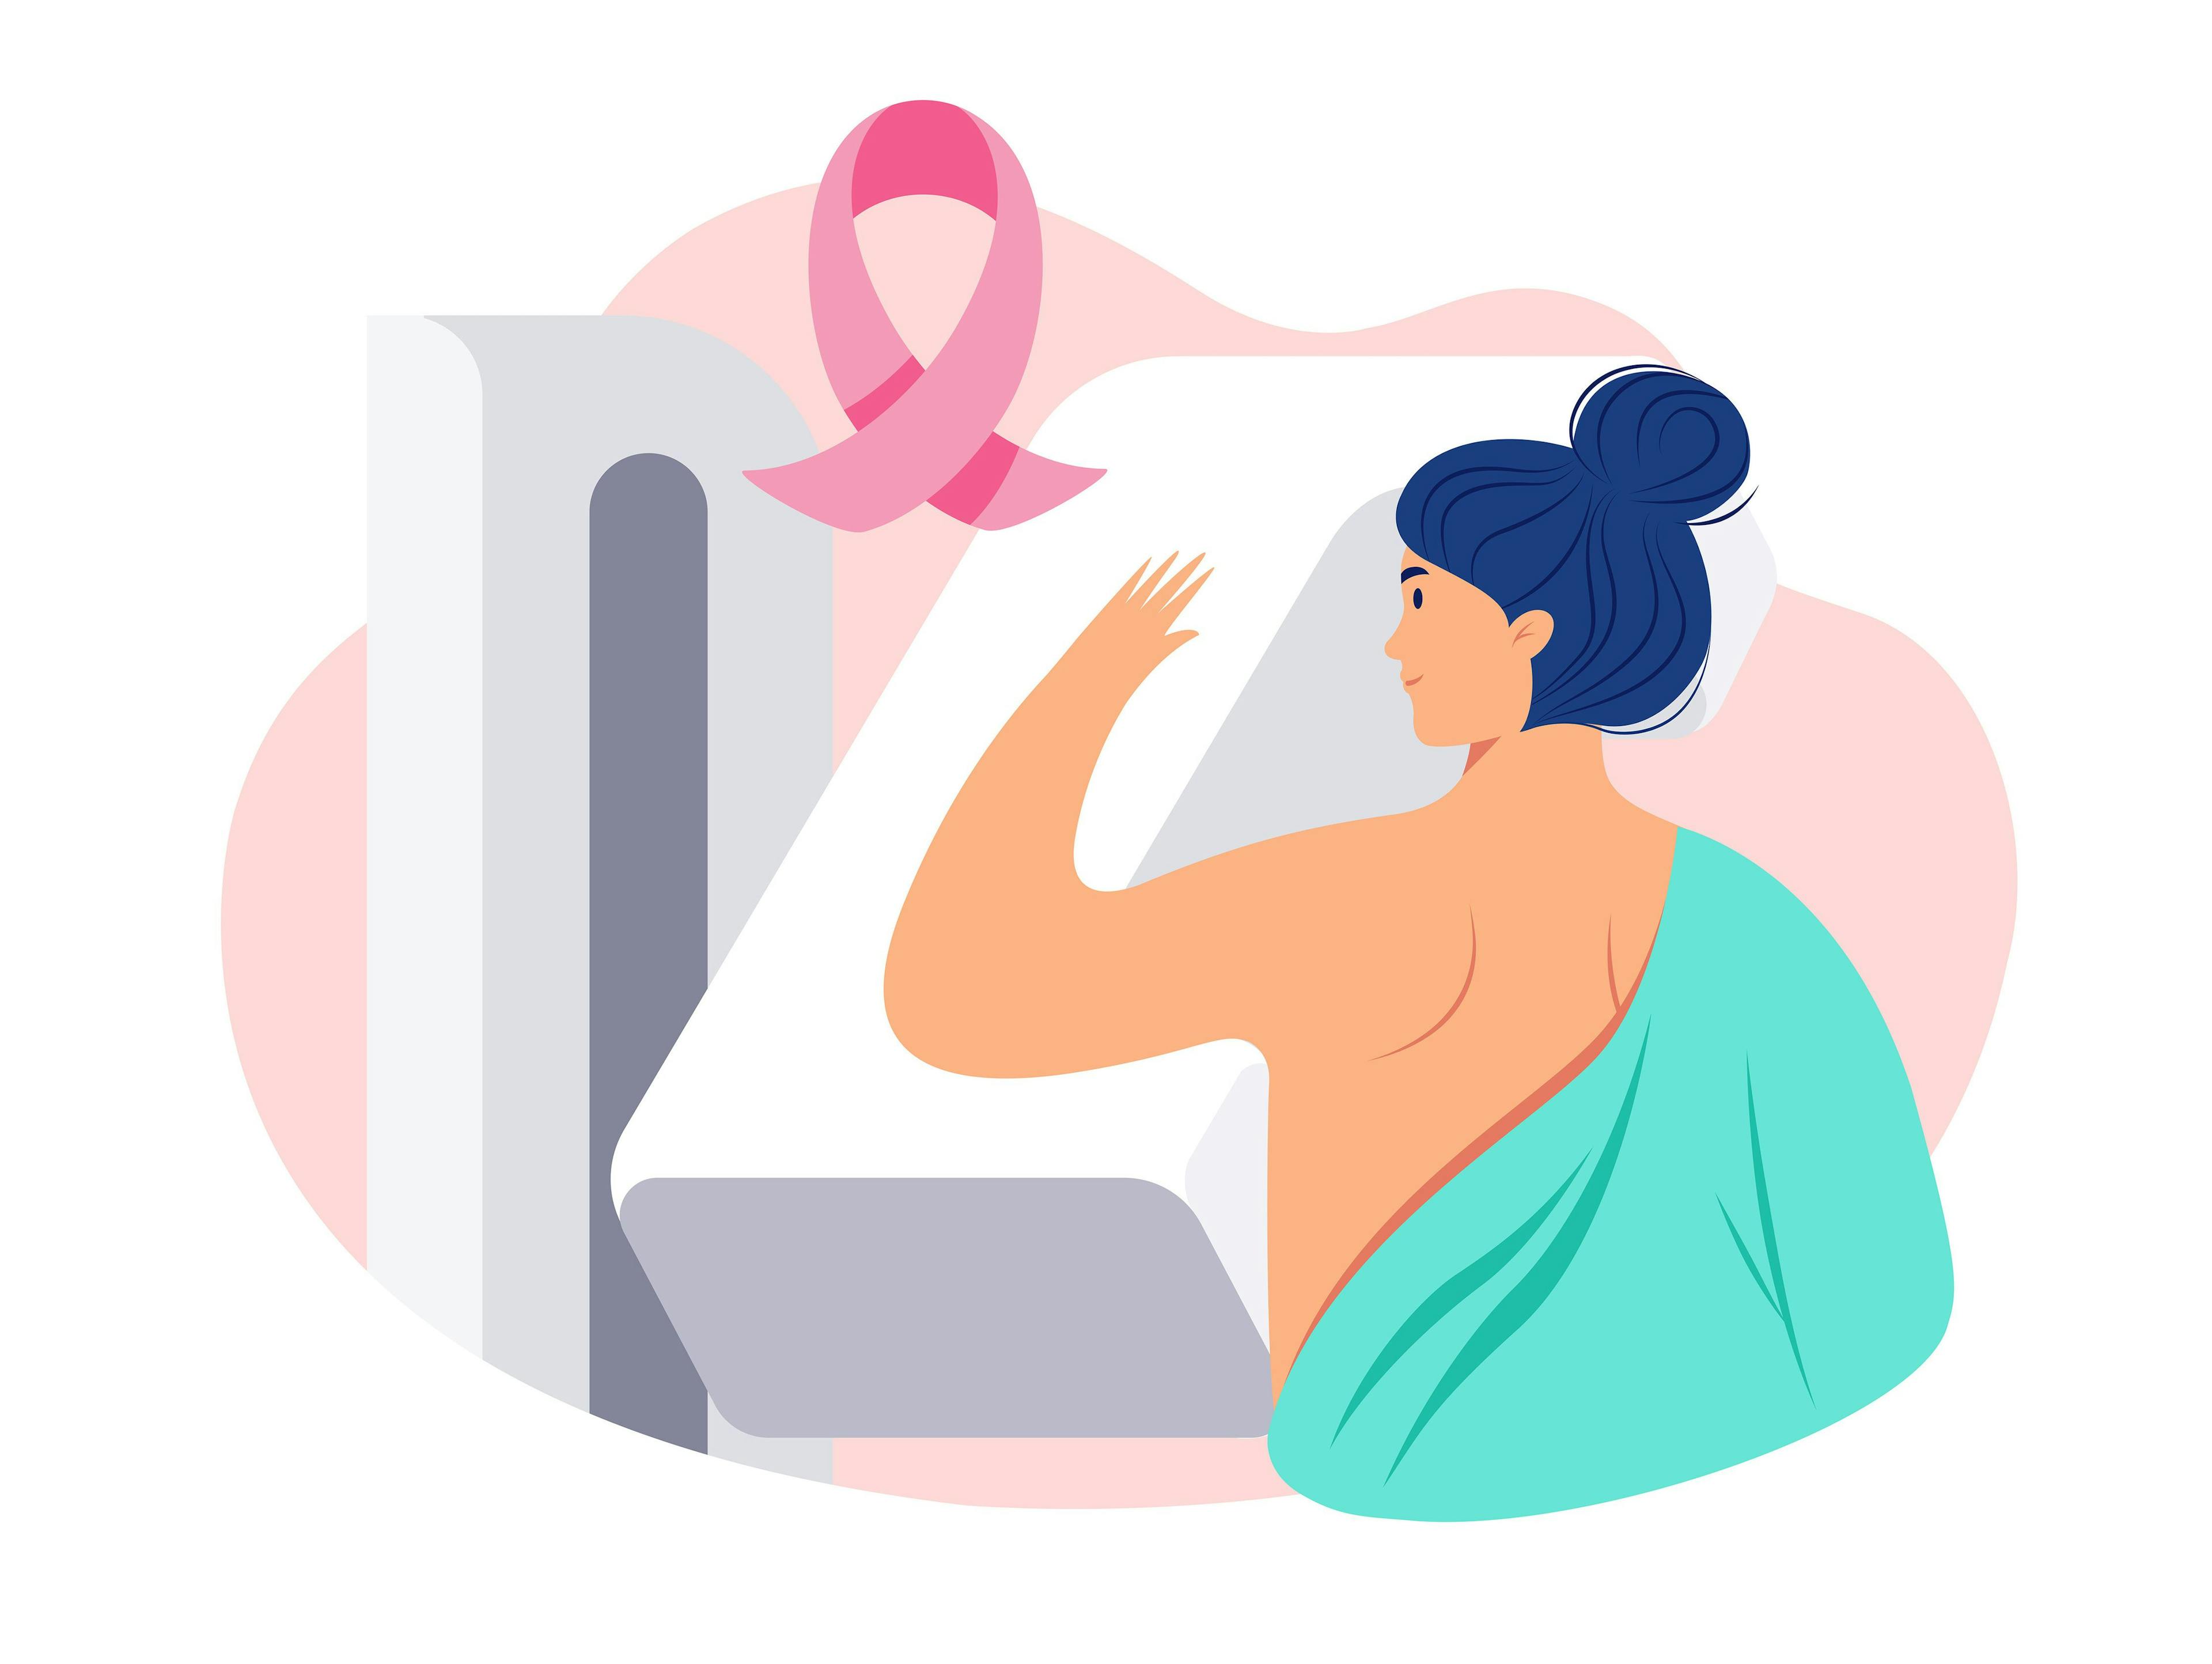 Illustration of woman getting mammogram | Image Credit: forestgraphic - stock.adobe.com